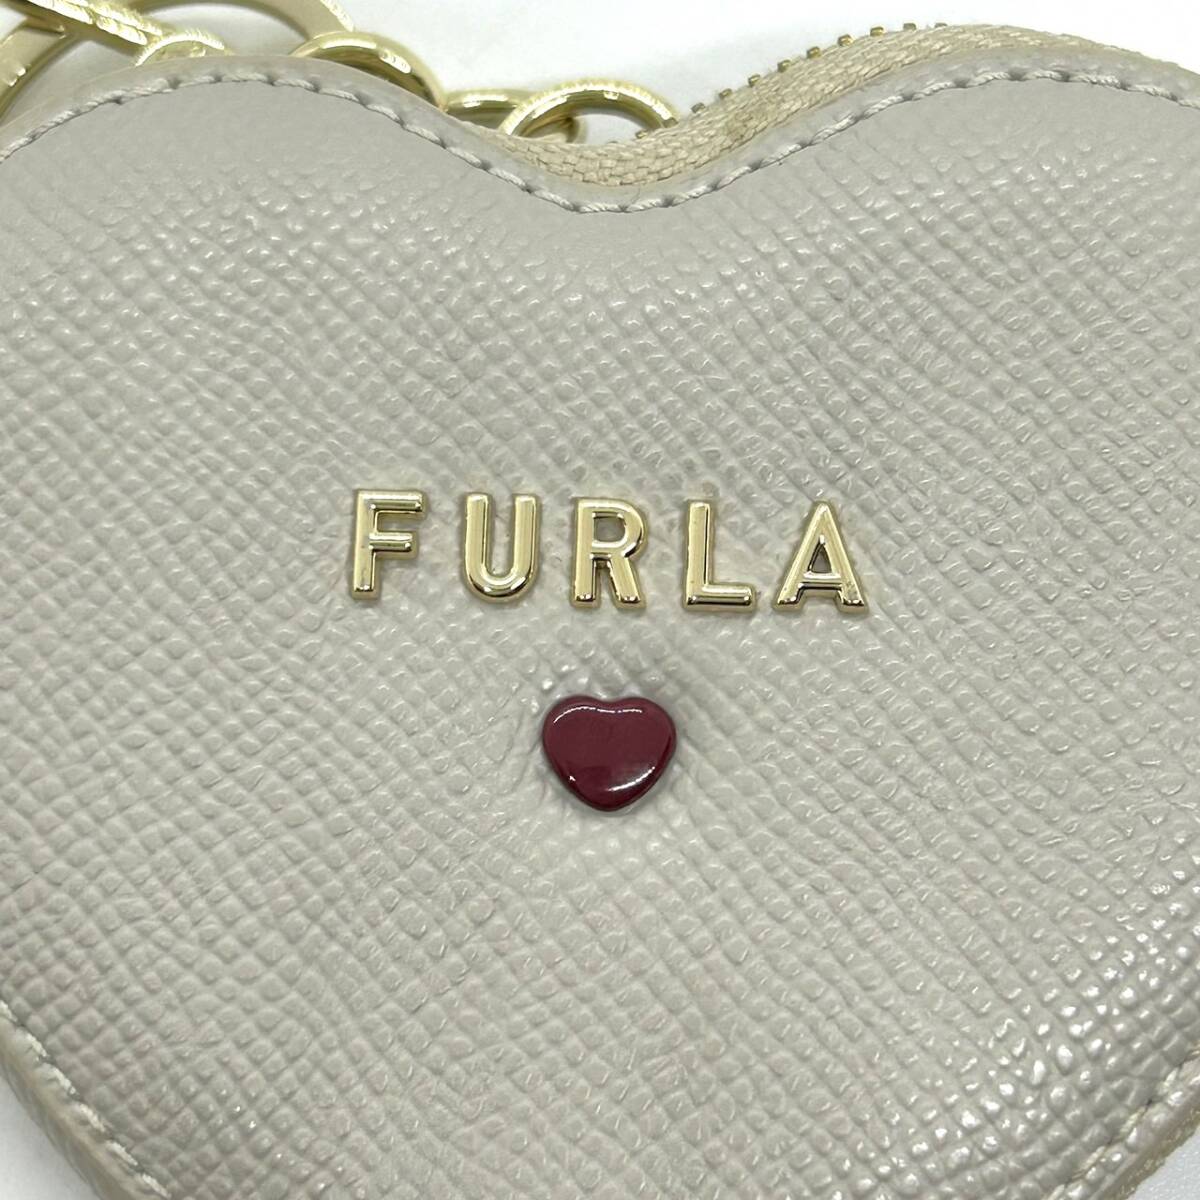 11495*FURULA Furla coin case purse Heart gray gray ju key chain change purse . box equipped Gold metal fittings Mini purse key holder 